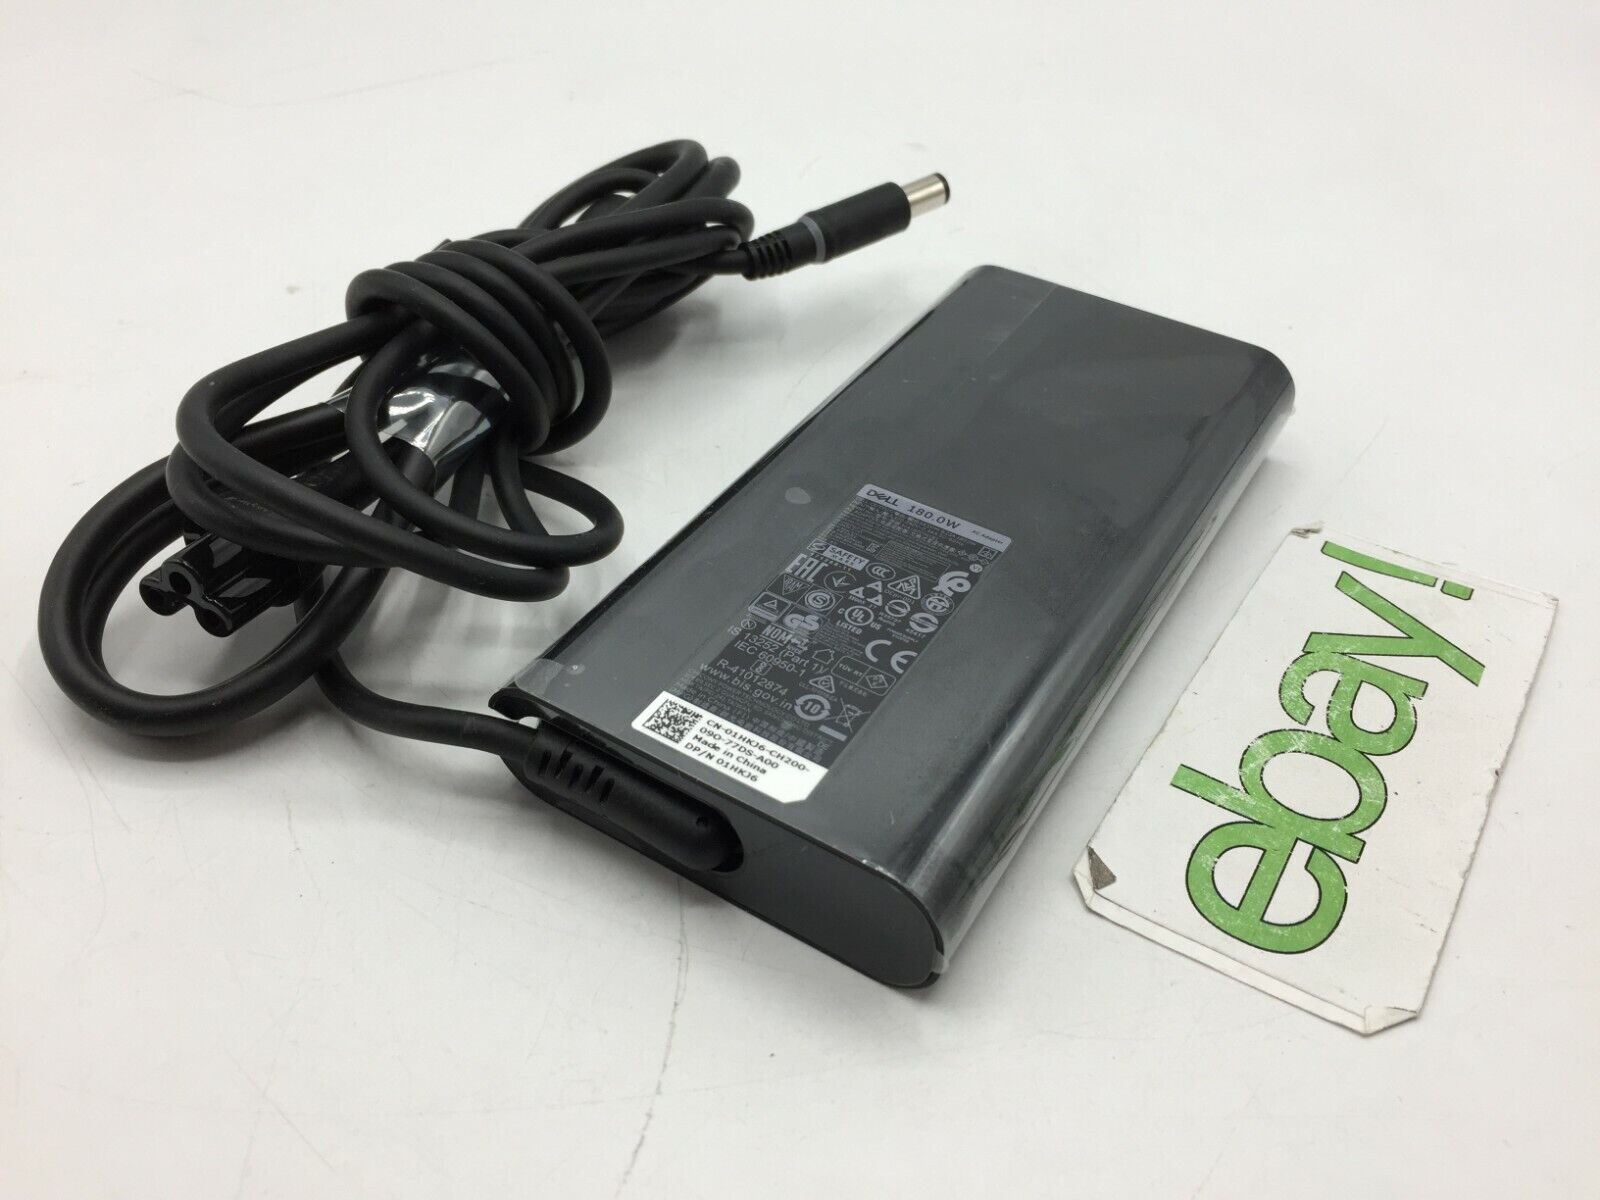 GENUINE Dell Alienware AC Power Adapter Cable  180W - HA180PM181 - FREE S/H